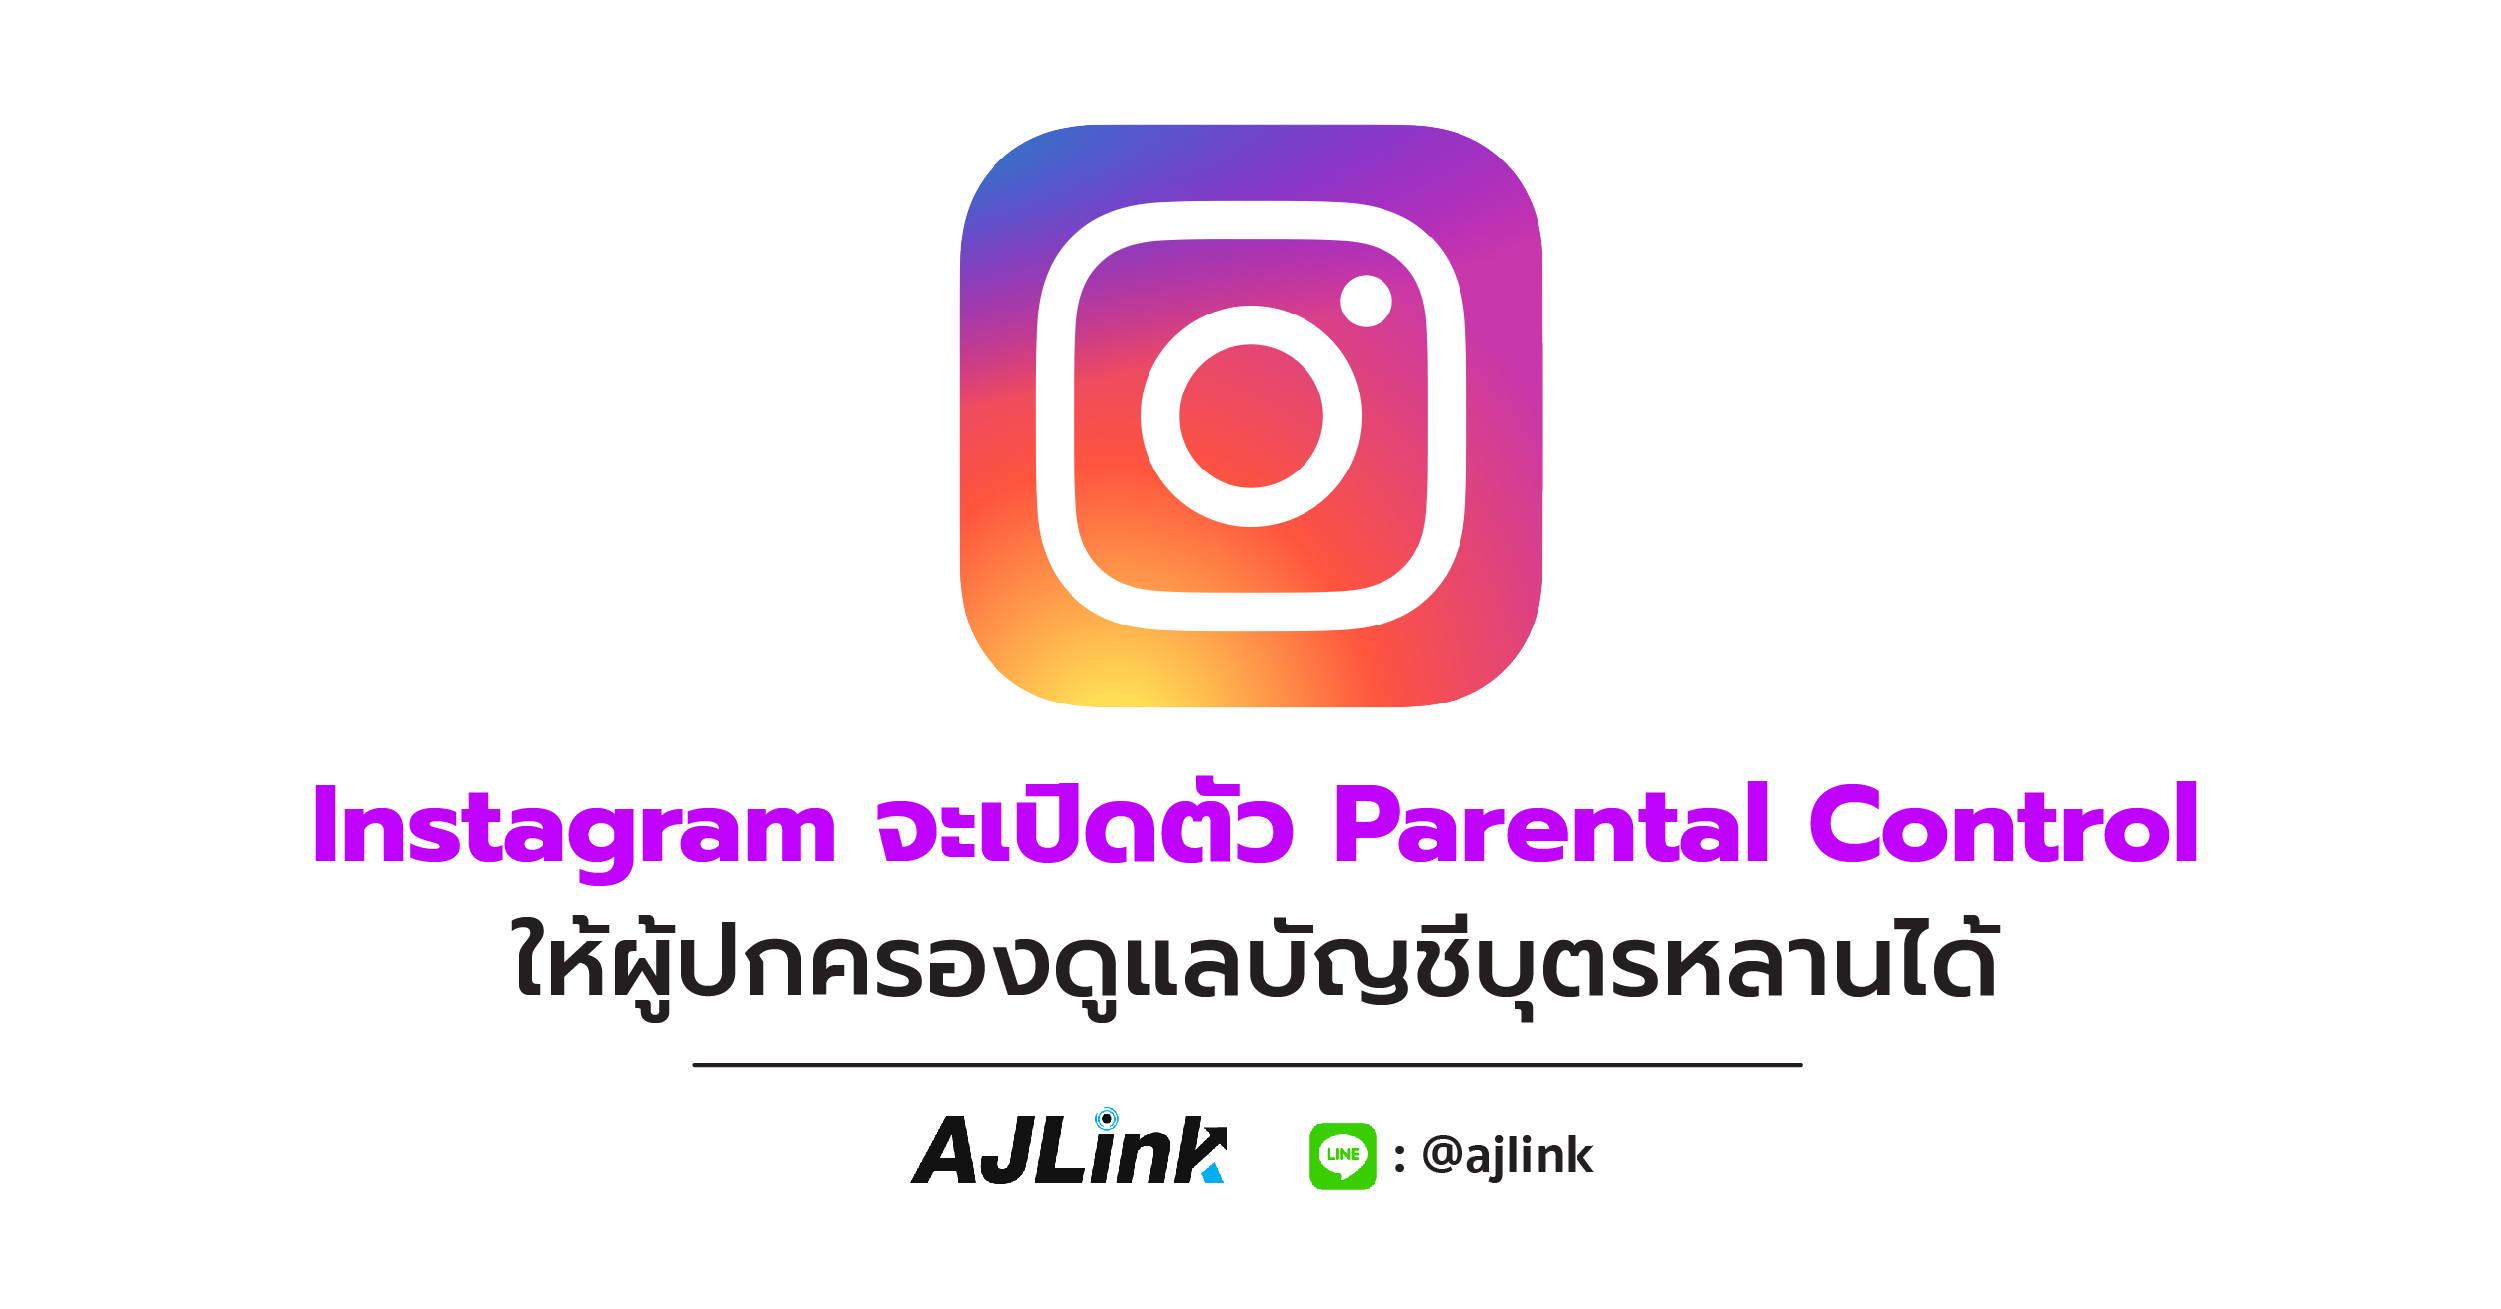 Instagram จะเปิดตัว Parental Control ให้ผู้ปกครองดูแลบัญชีบุตรหลานได้